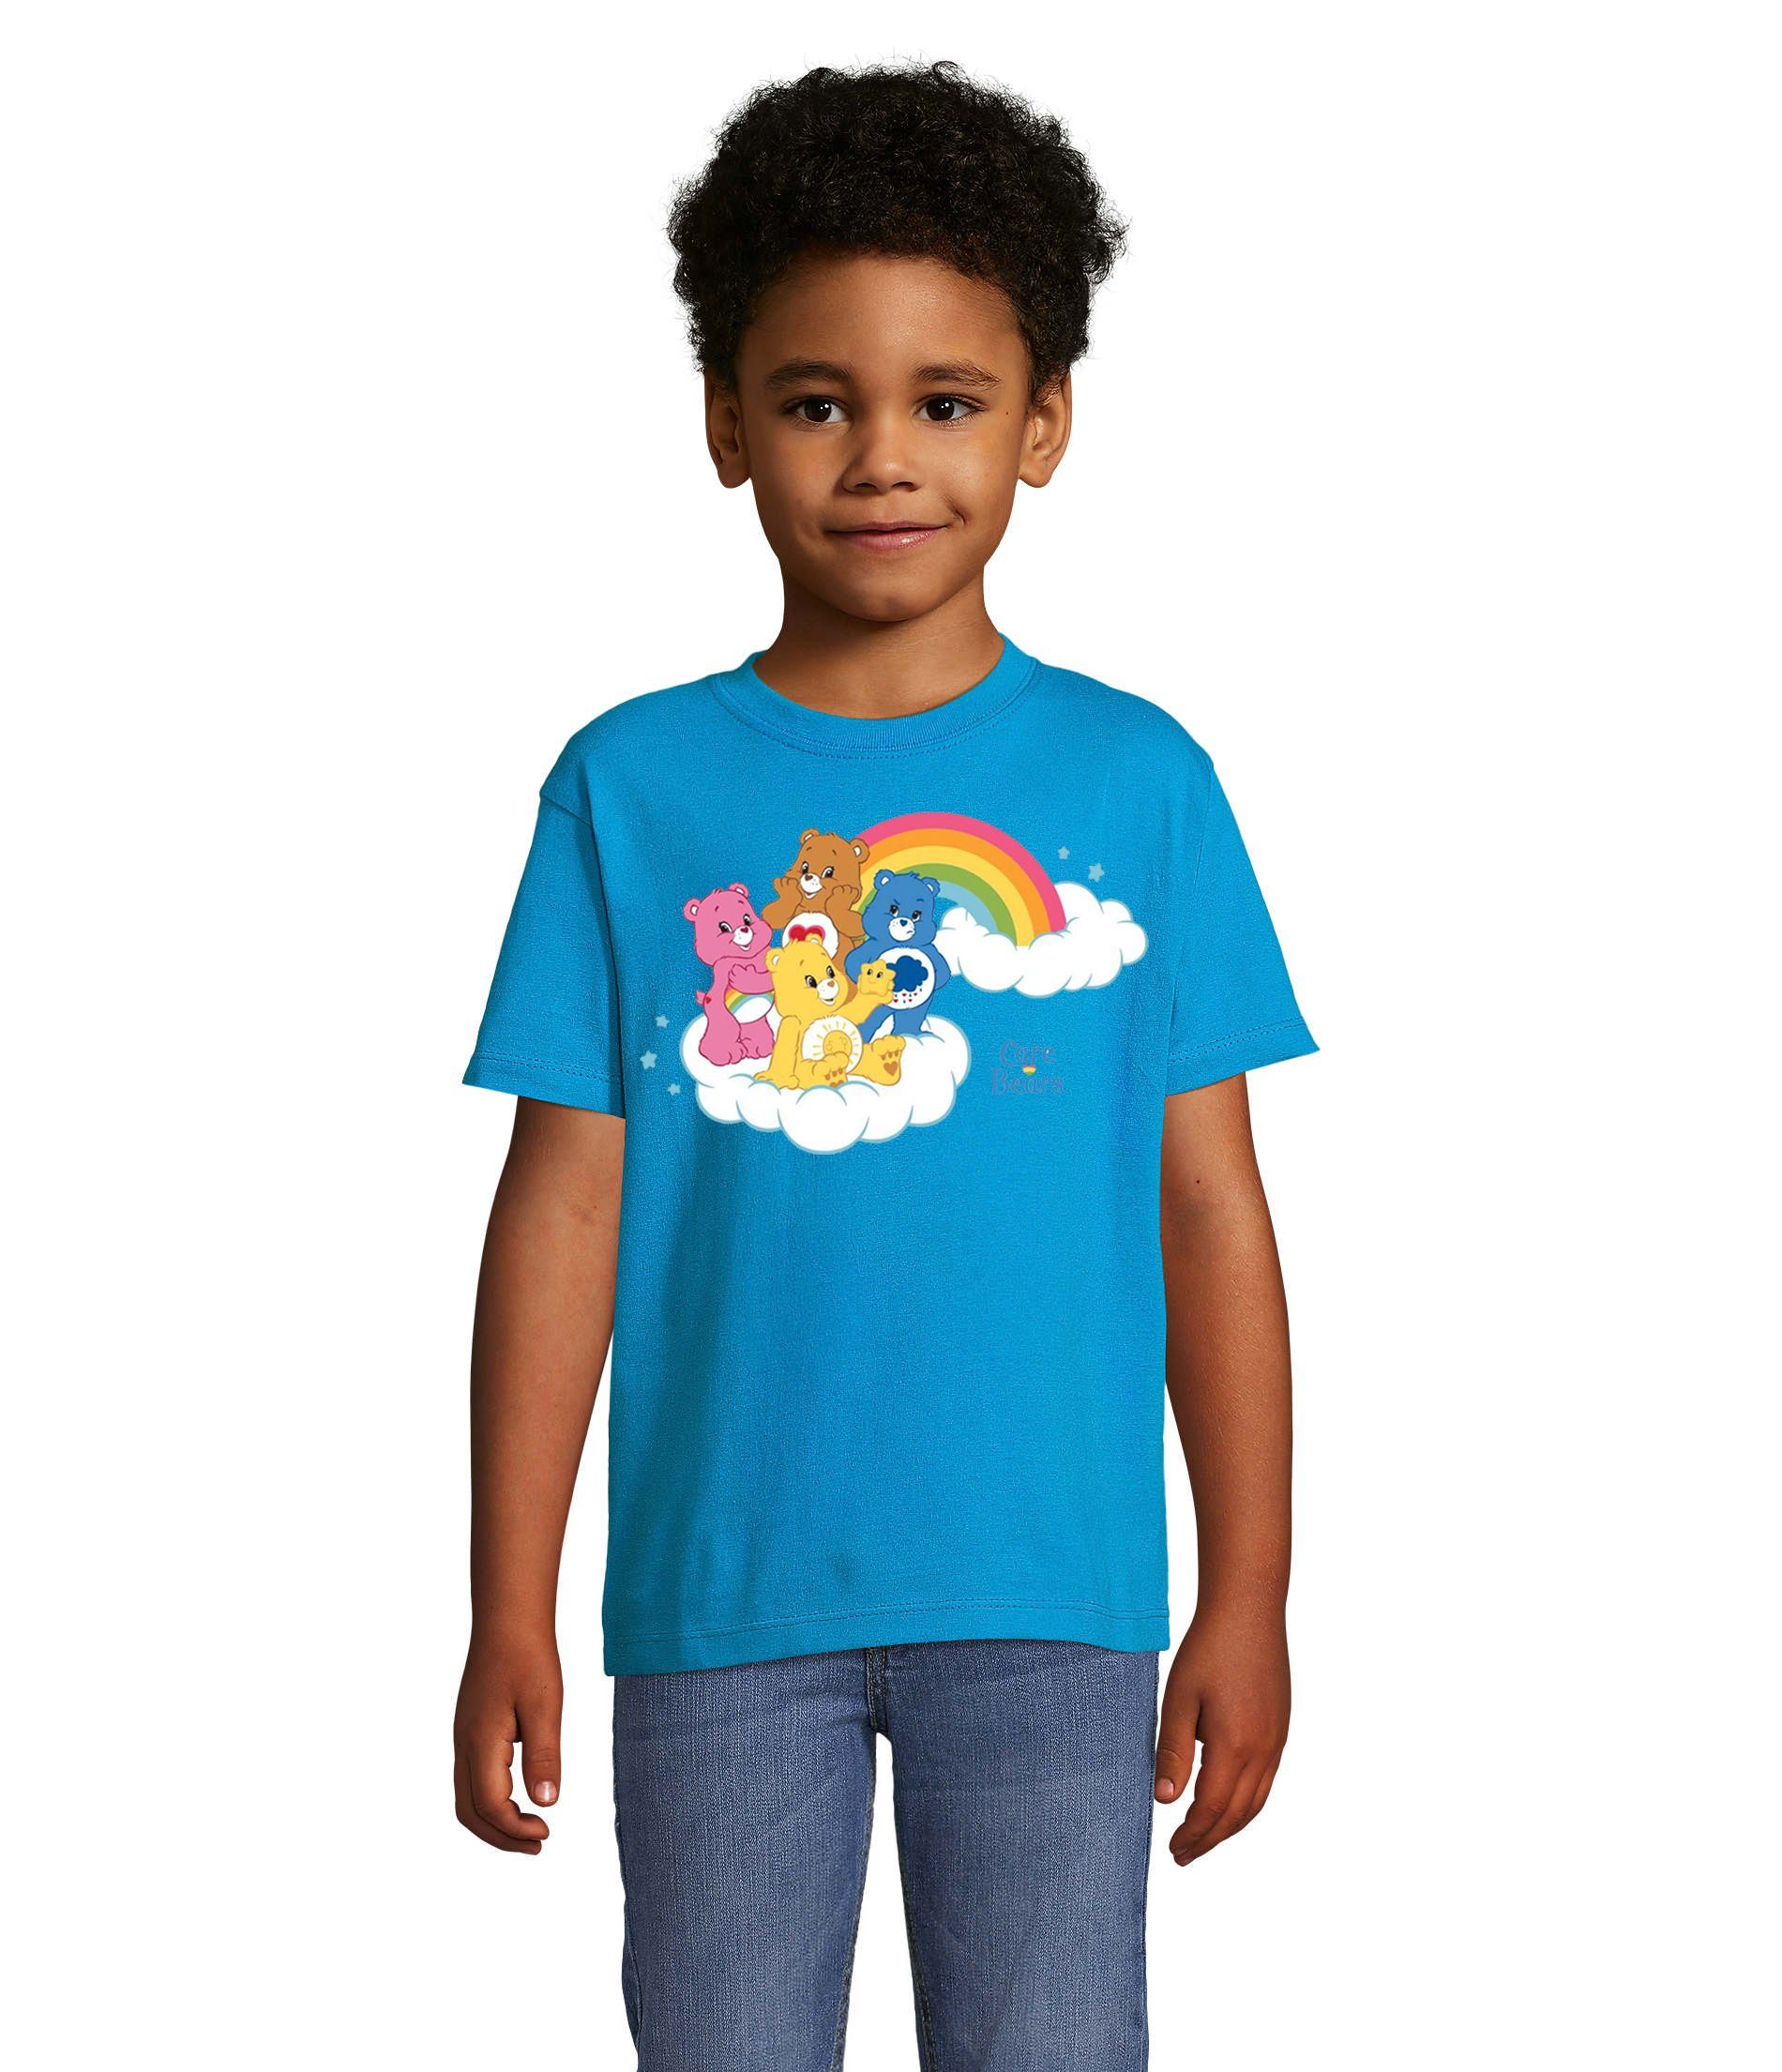 Blondie & Brownie T-Shirt Kinder Glücksbärchis Care Bears Hab-Dich-lieb Bärchis Wolkenland Blau